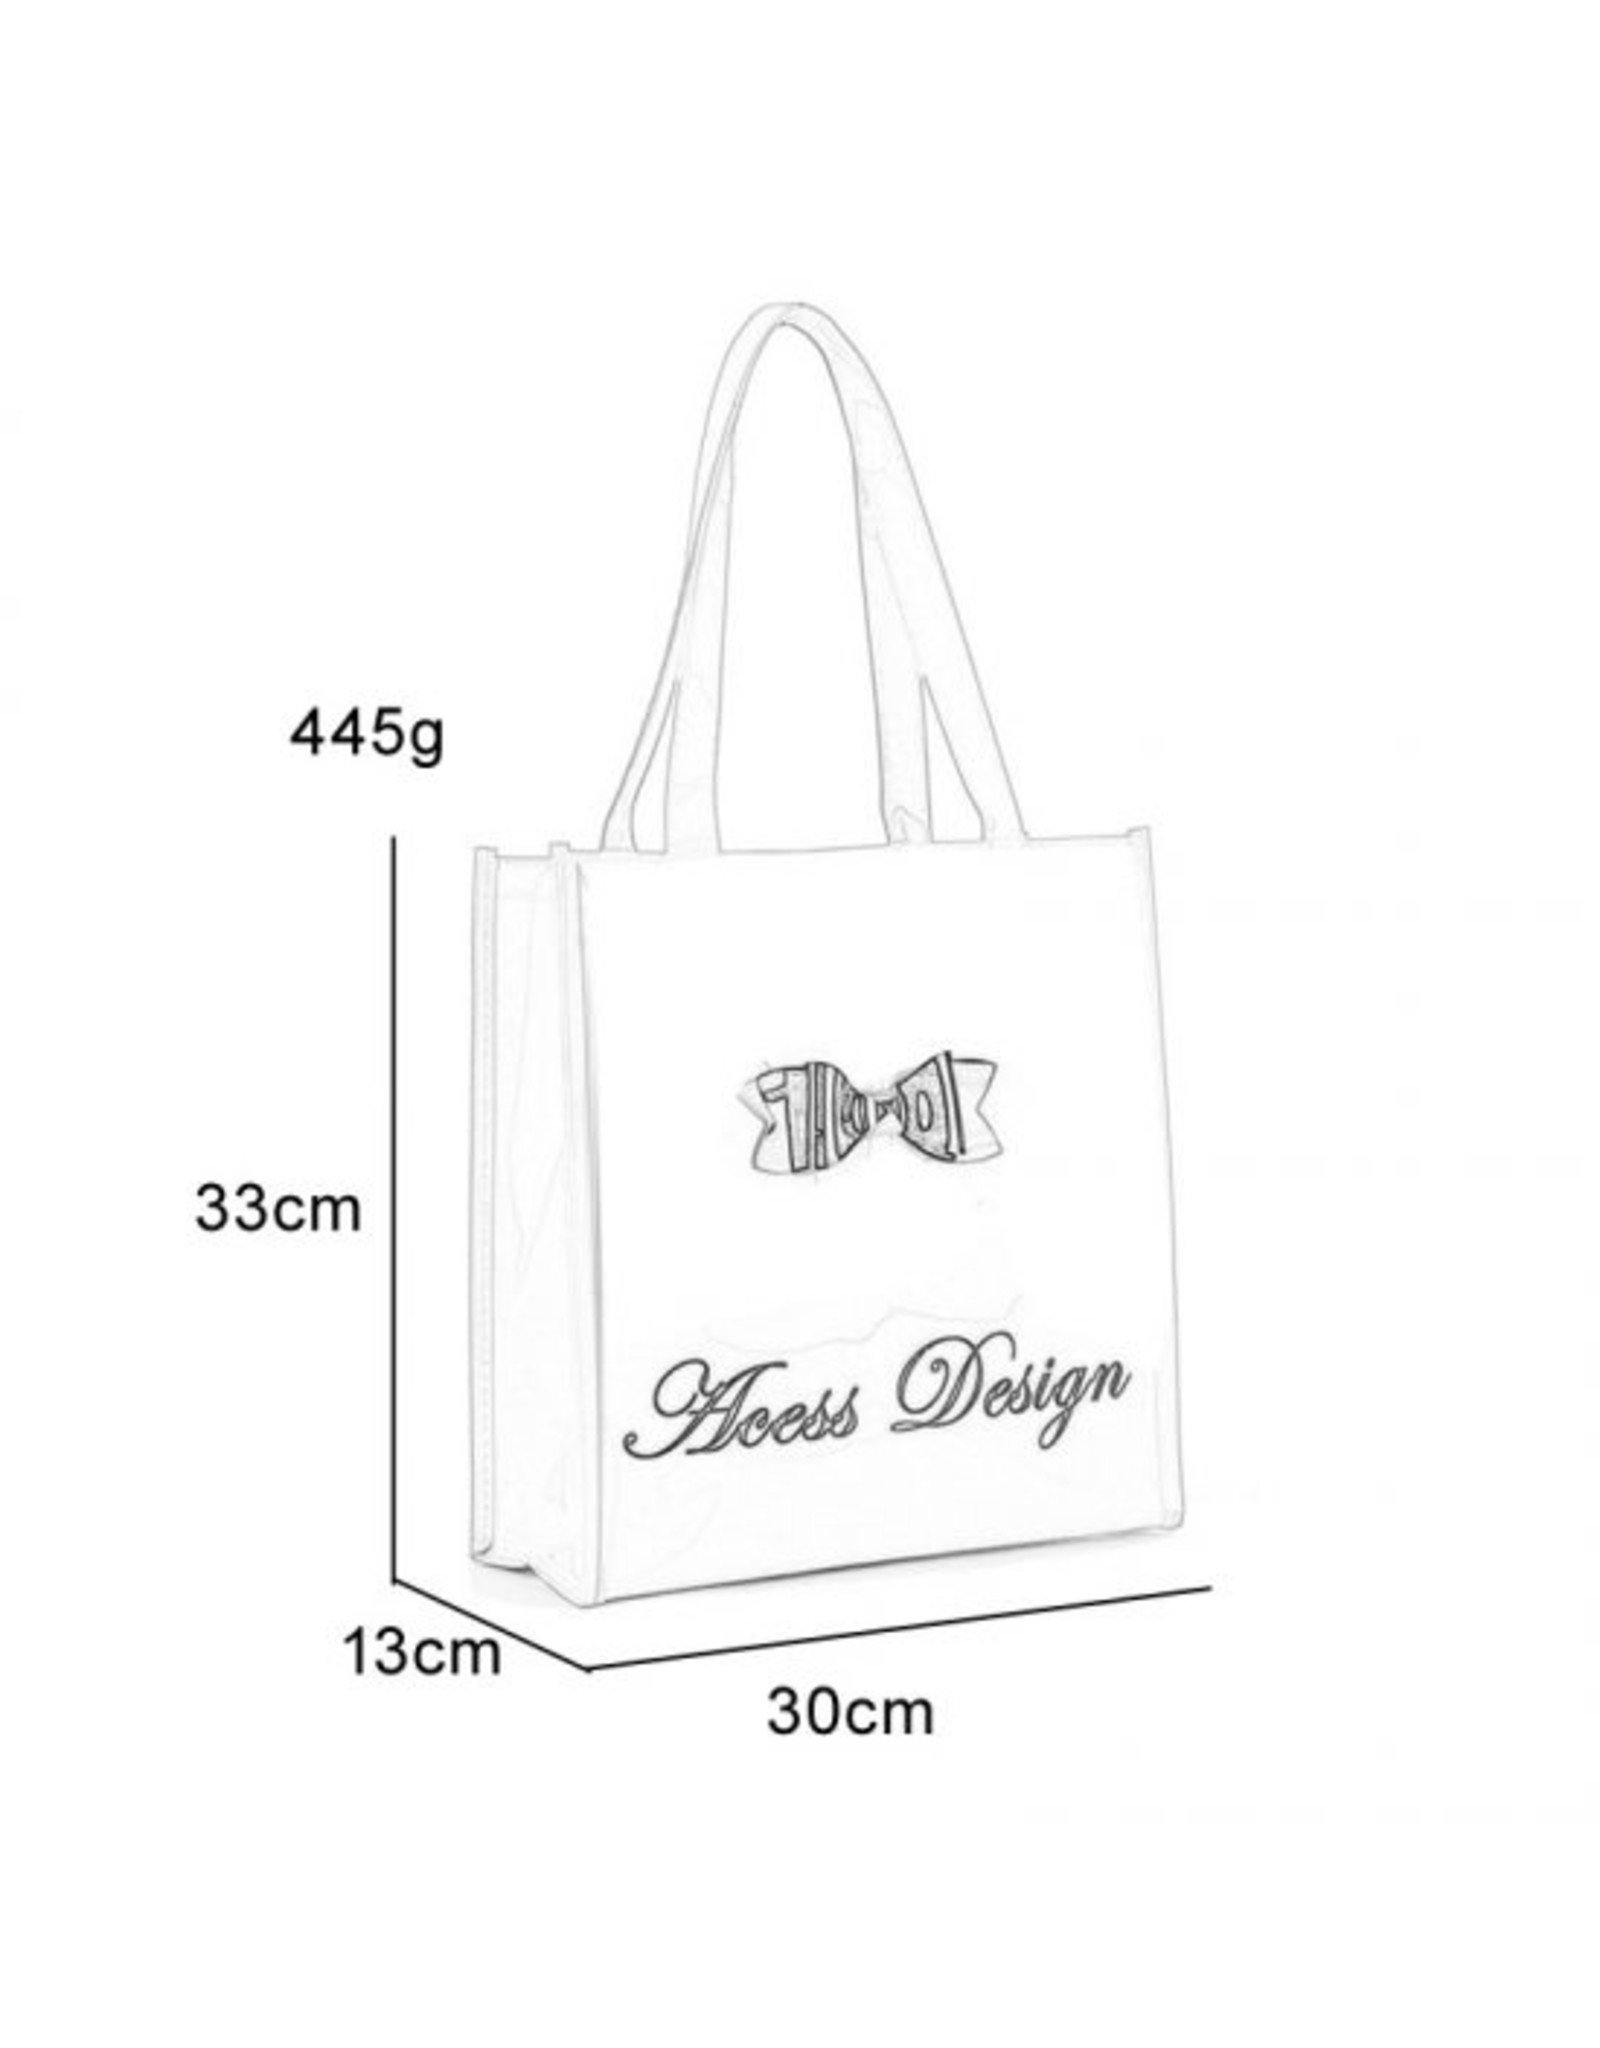 Trukado Fashion bags - Tote Bag with Bow and Zipper Fuchsia Patent